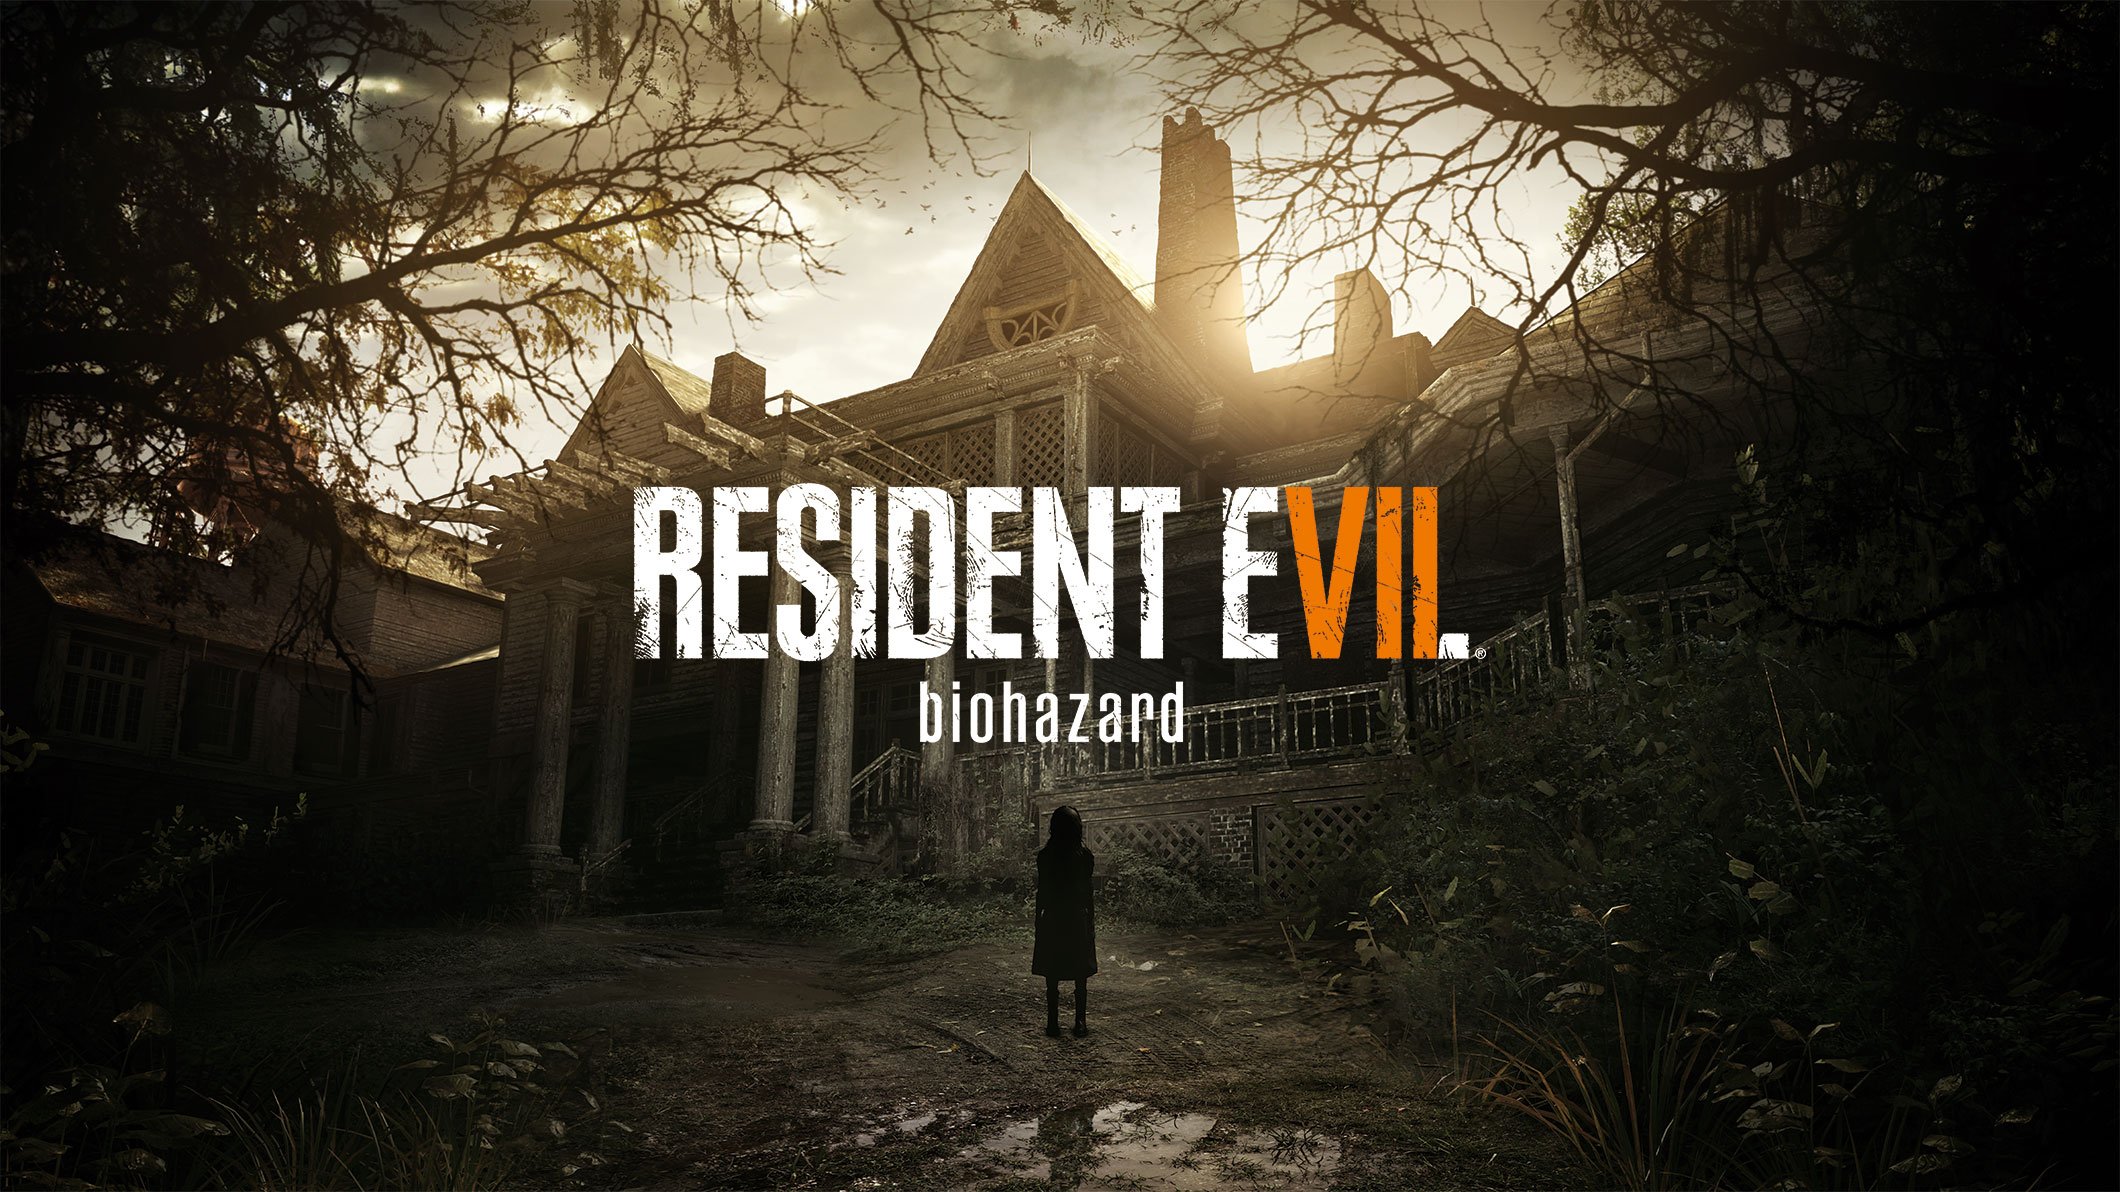 Resident Evil 7 biohazard - Часть 4